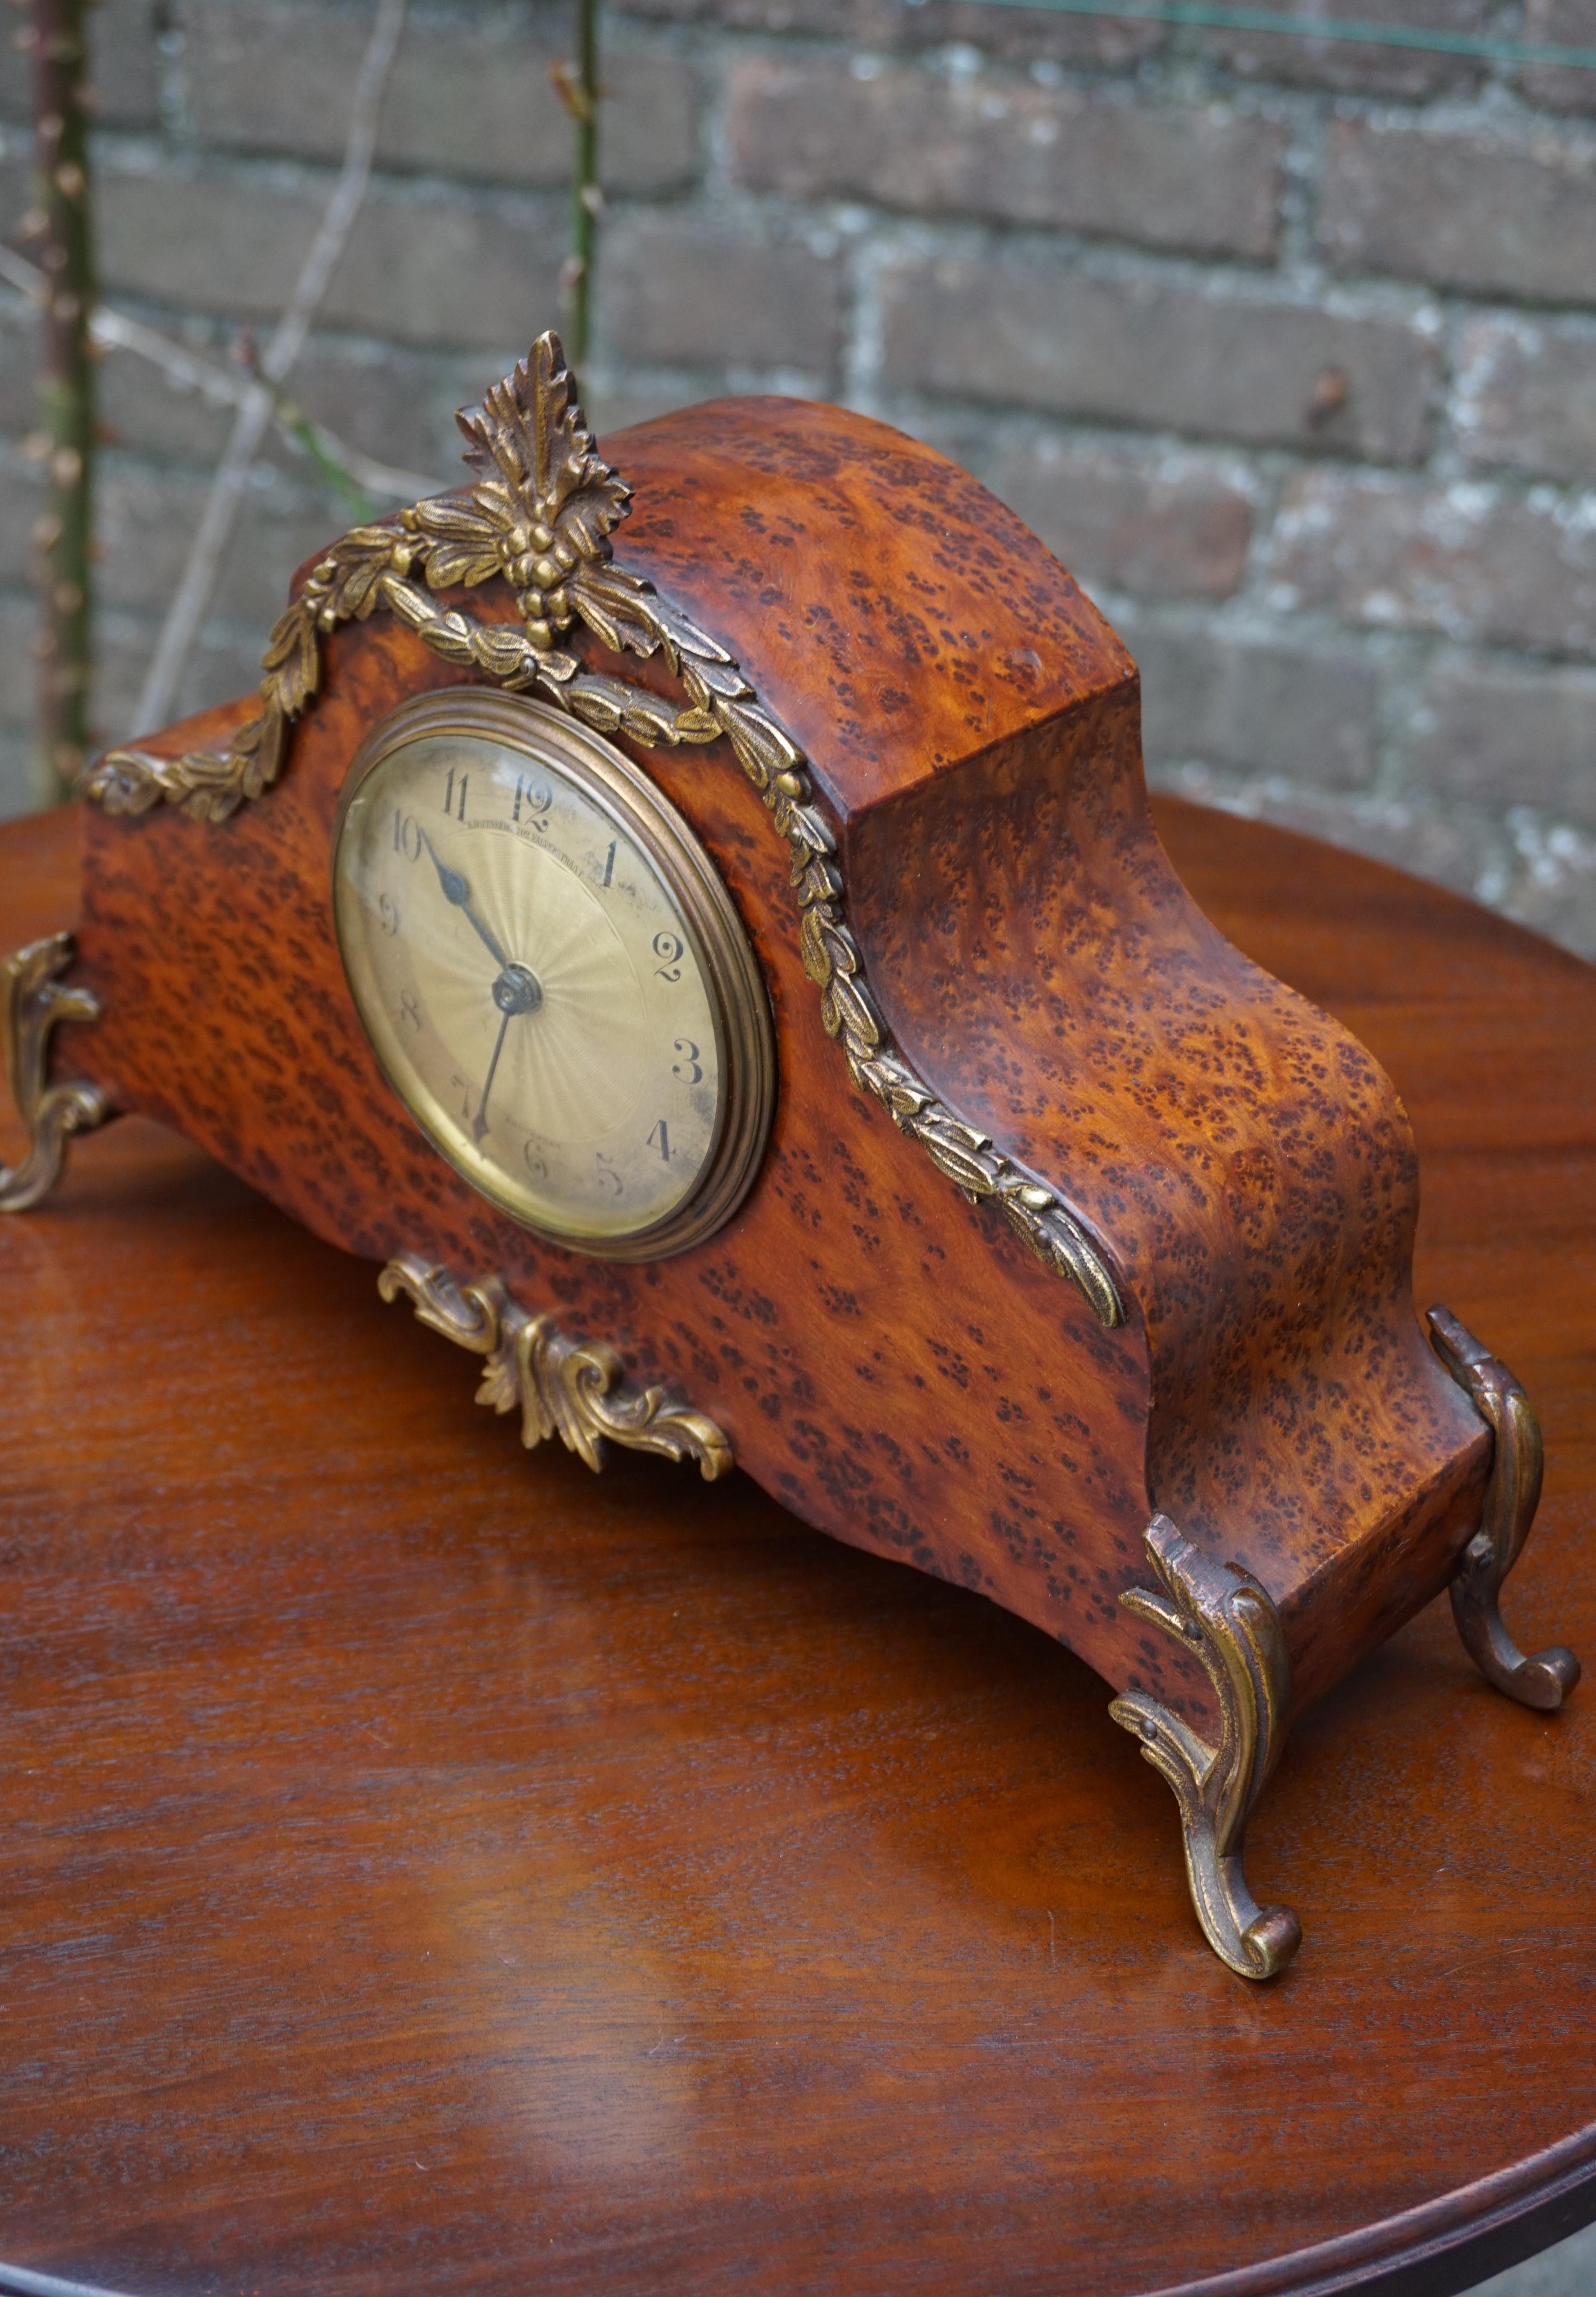 Stunning Burl Walnut Table or Mantel Clock with Stylish Bronze Feet & Ornaments 5